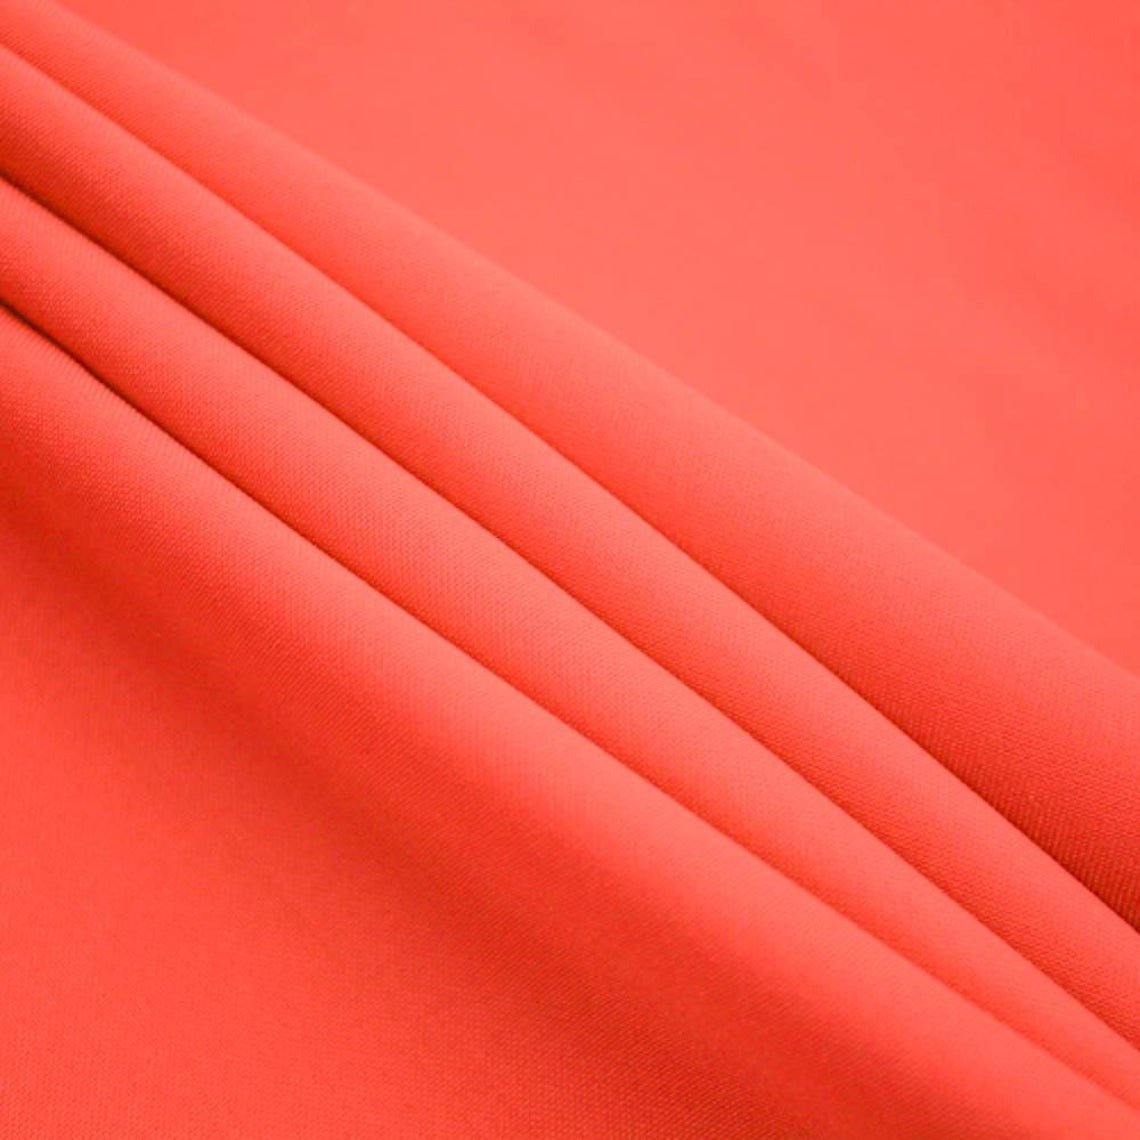 Wholesale Poly Poplin Fabric CoralICE FABRICSICE FABRICSBy The Roll (60" Wide)Wholesale Coral Poly Poplin Fabric ICE FABRICS